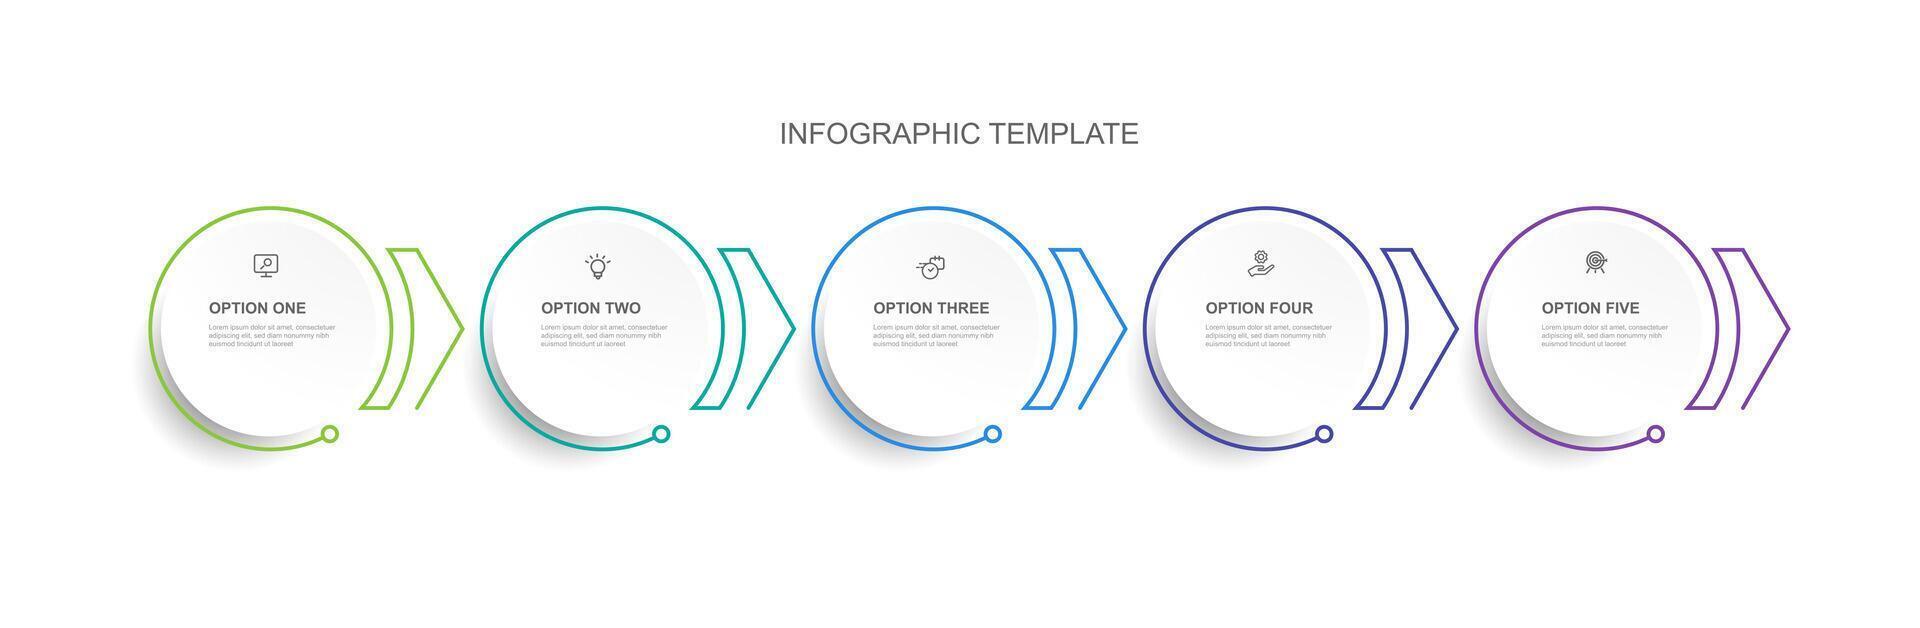 diseño modelo infografía vector elemento con 5 5 paso proceso adecuado para web presentación y negocio información